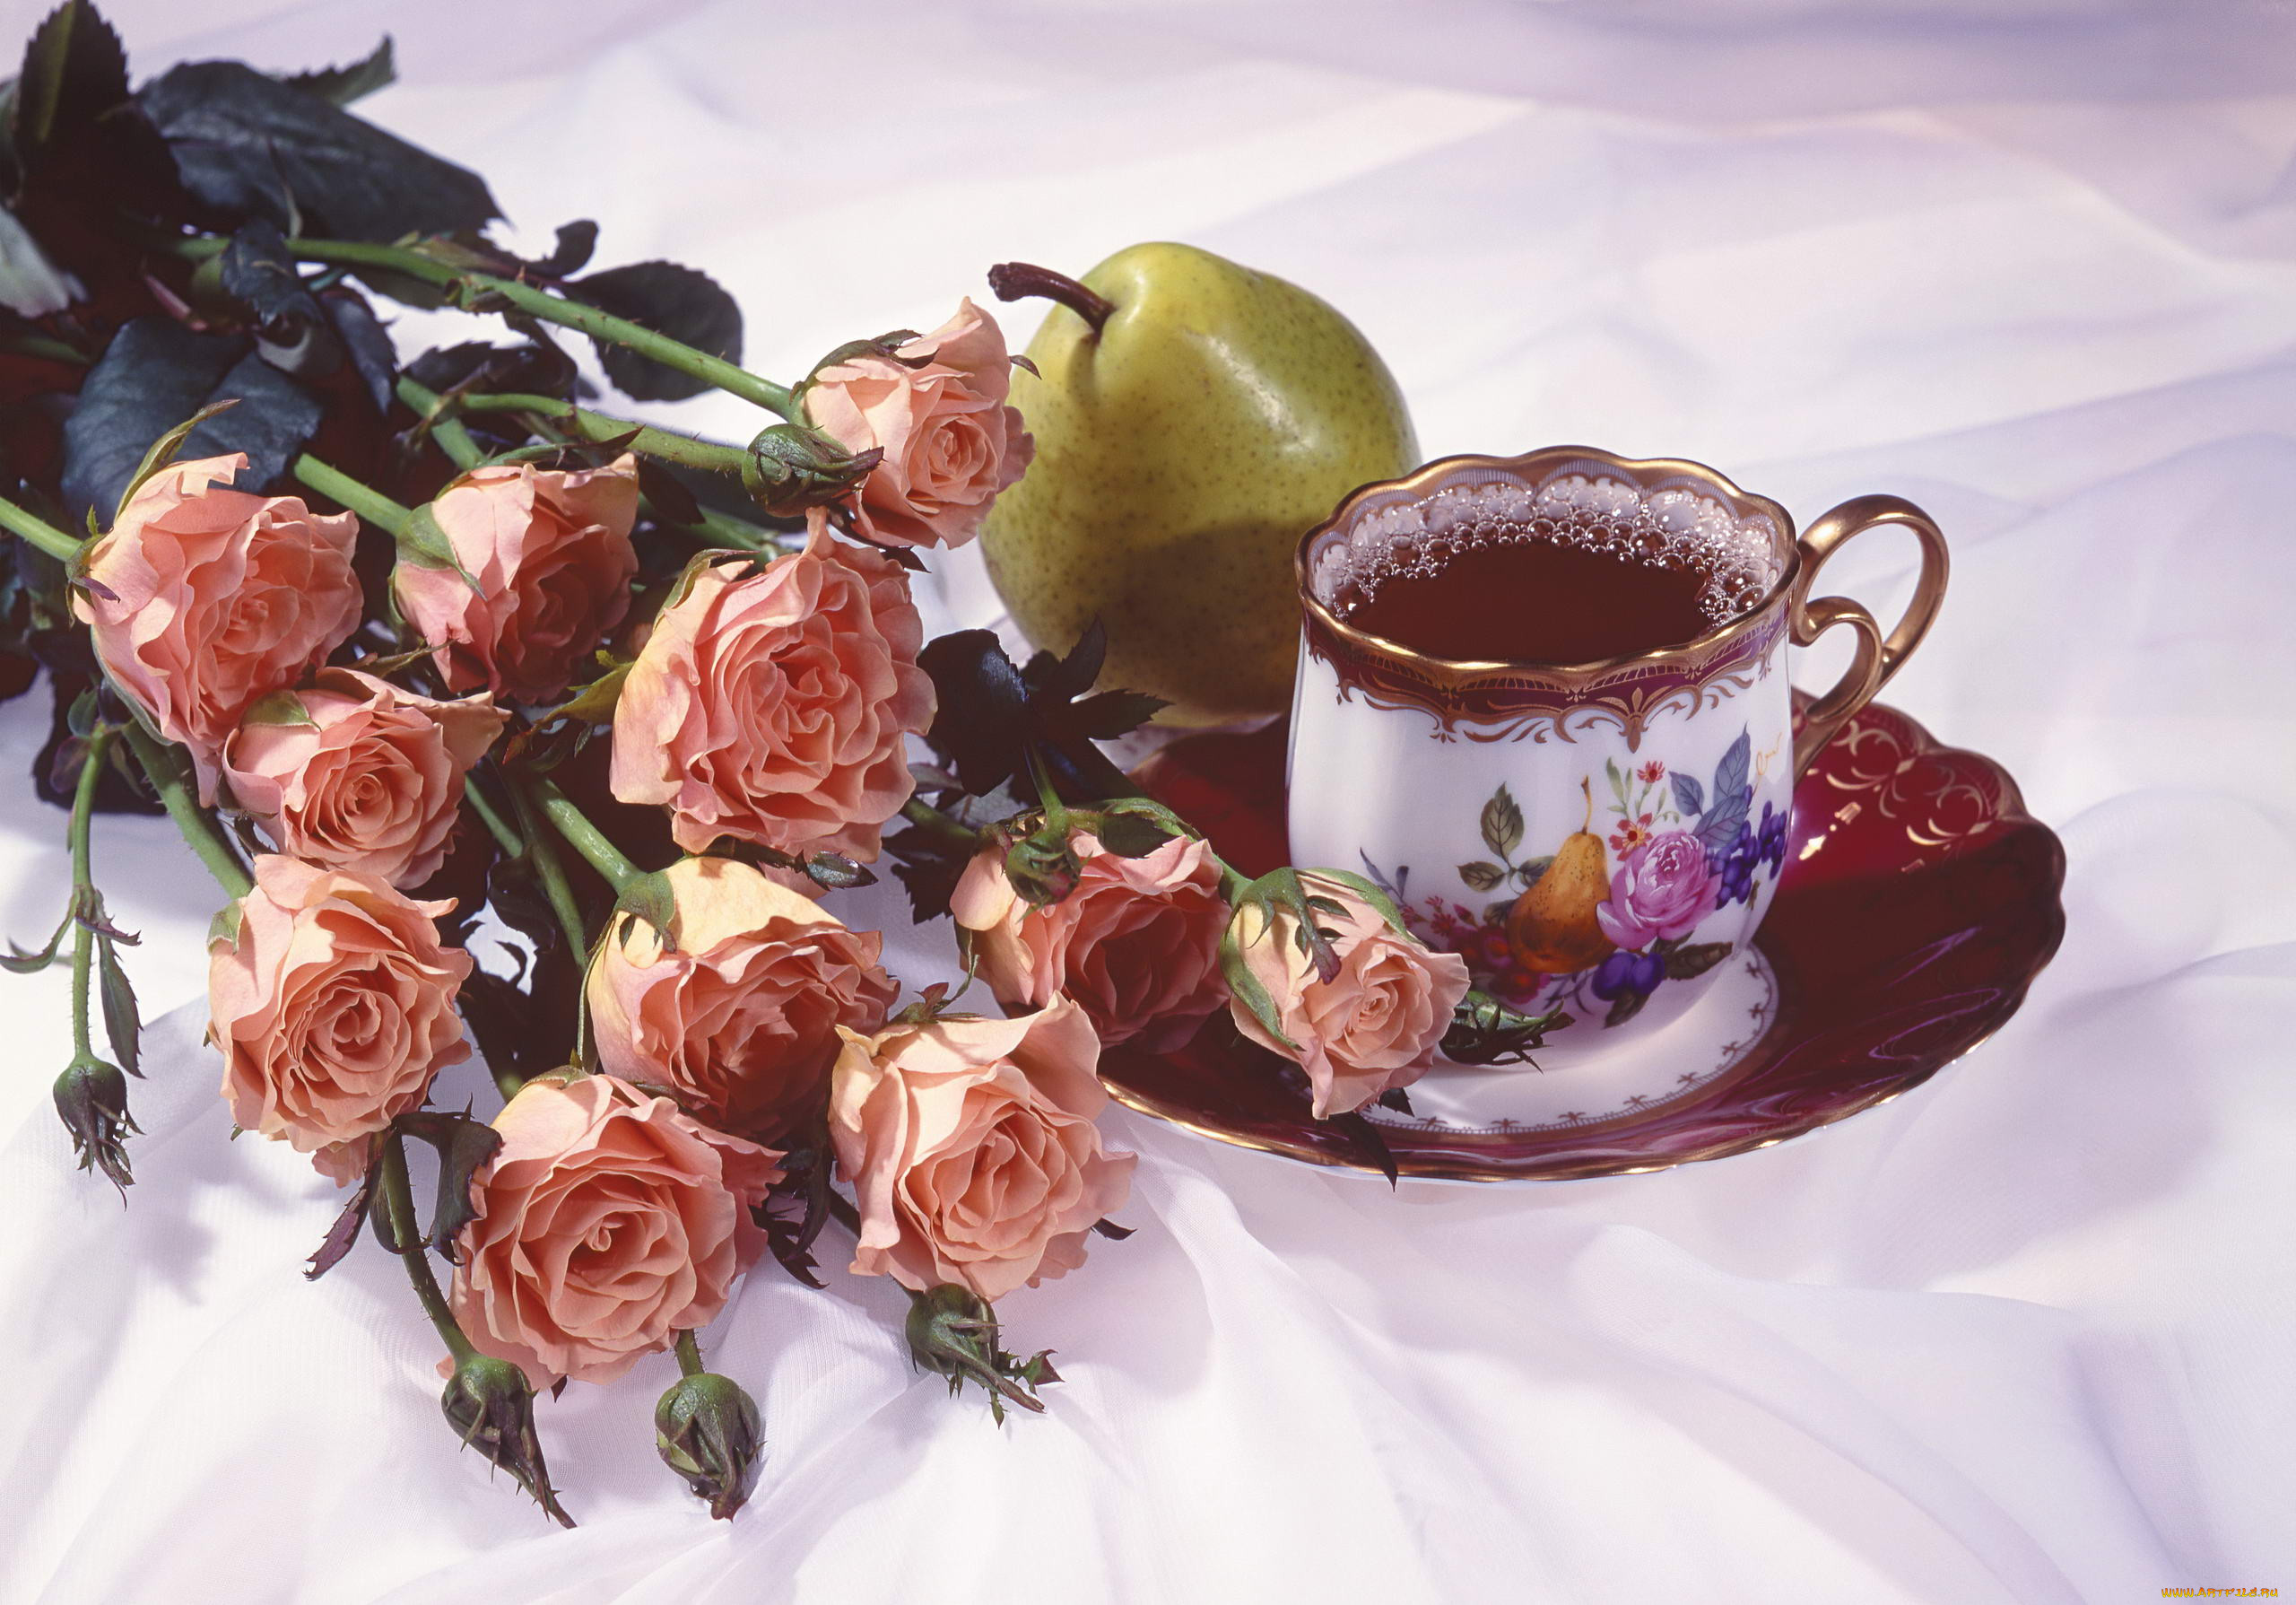 Счастливого доброго утра и прекрасного дня. Открытки доброе утро. Прекрасного утра и настроения. Открытки с добрым утром с розами. Открытки с добрым утром с цветами.